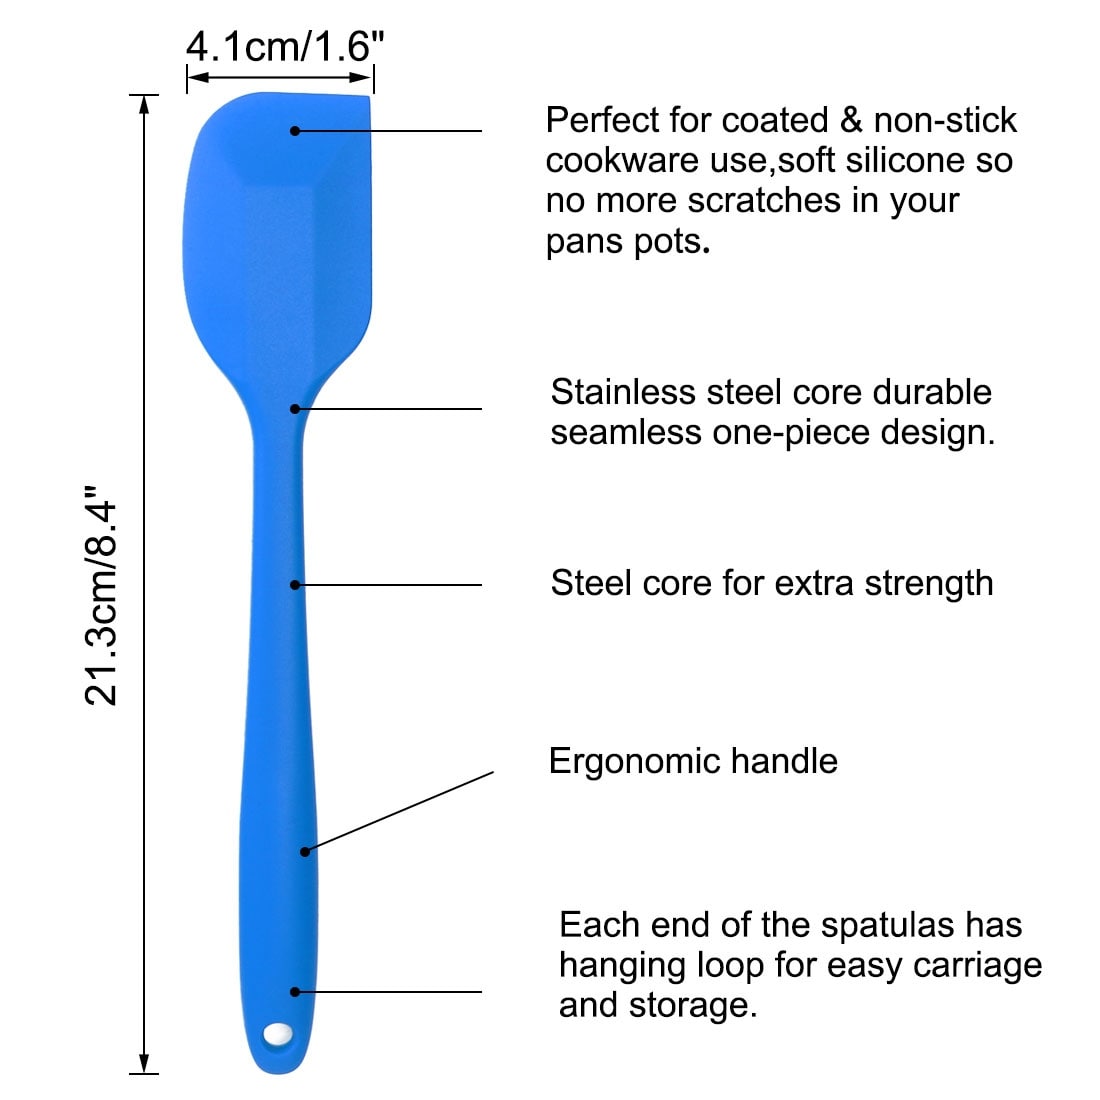 Two-color silicone non-stick cookware set of 2 kitchen spatula, spoon,  colander, frying spatula